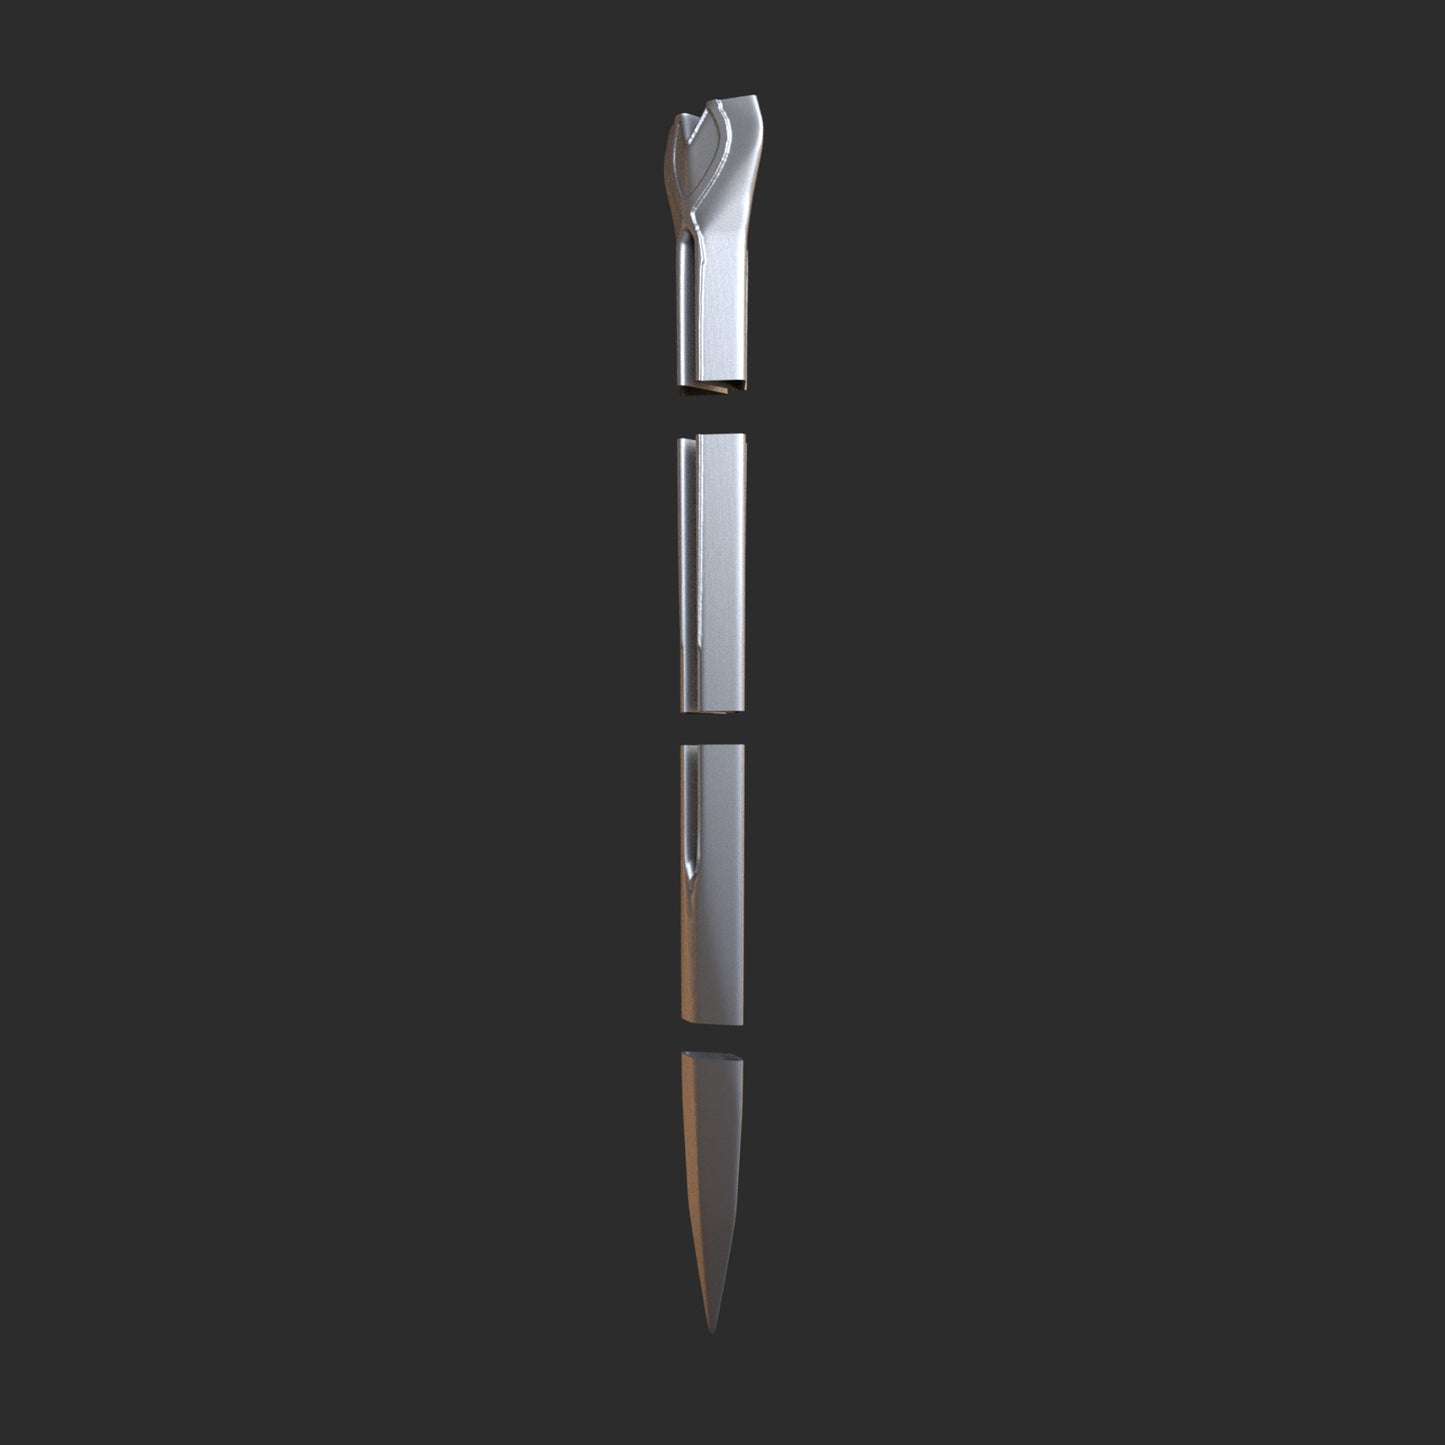 Eula Skill Sword - Digital 3D Model Files and Physical 3D Printed Kit Options - Eula Cosplay - Eula Sword